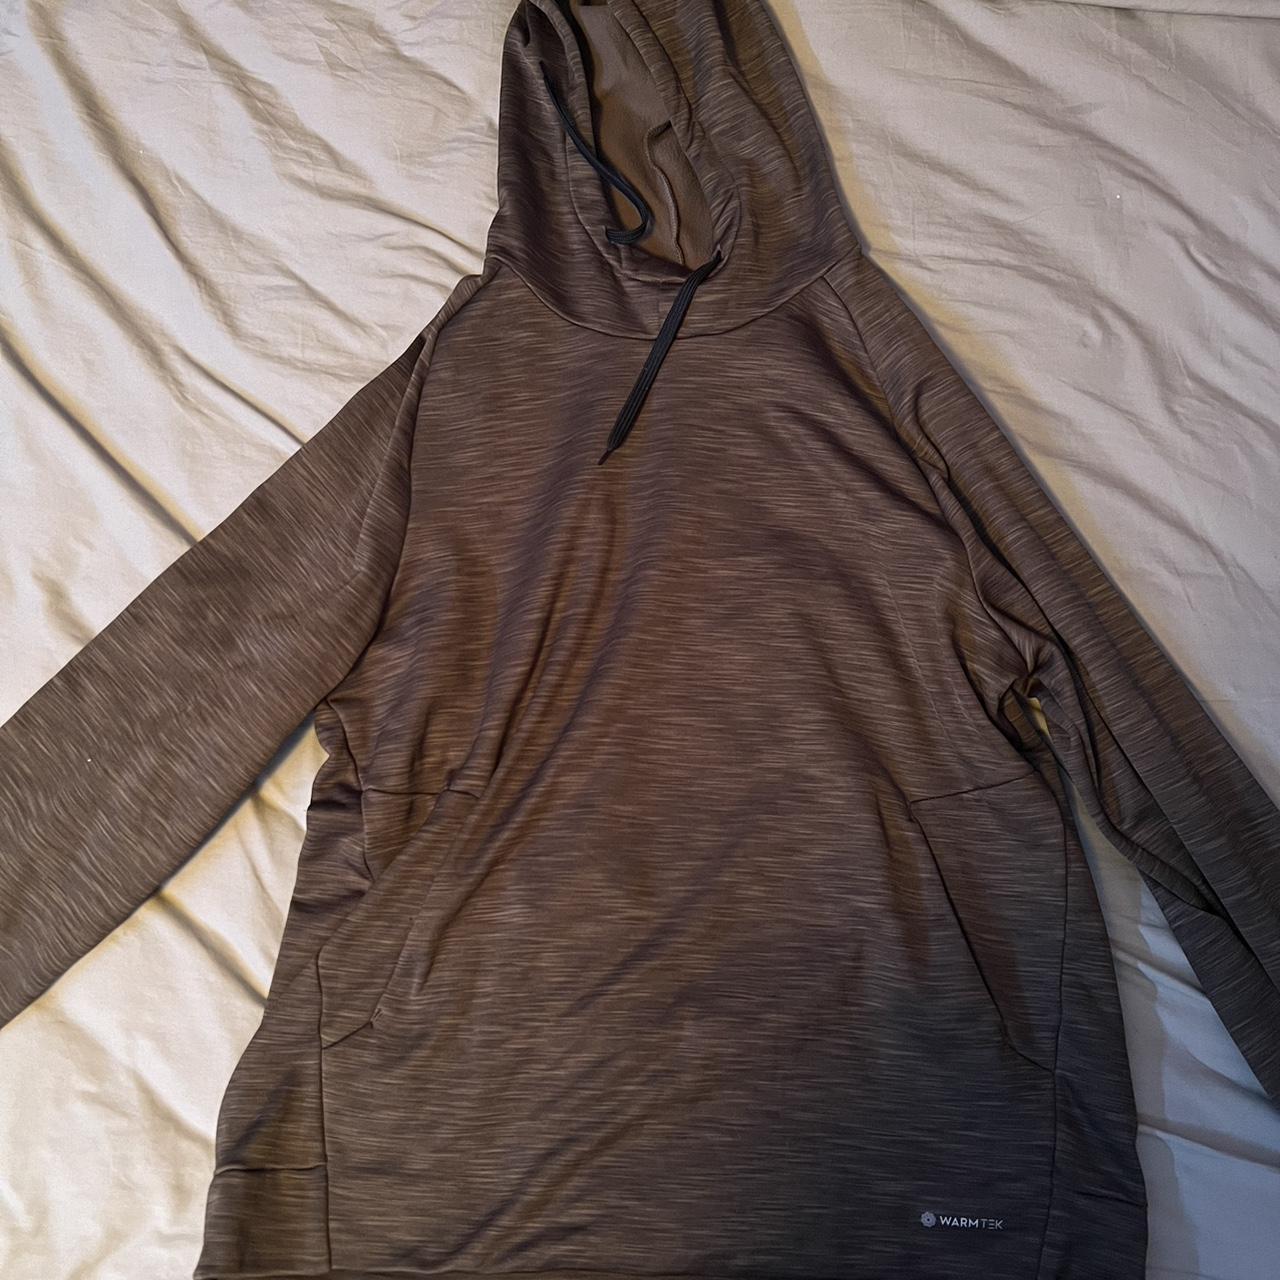 XL Tek Gear hoodie, barely worn - Depop